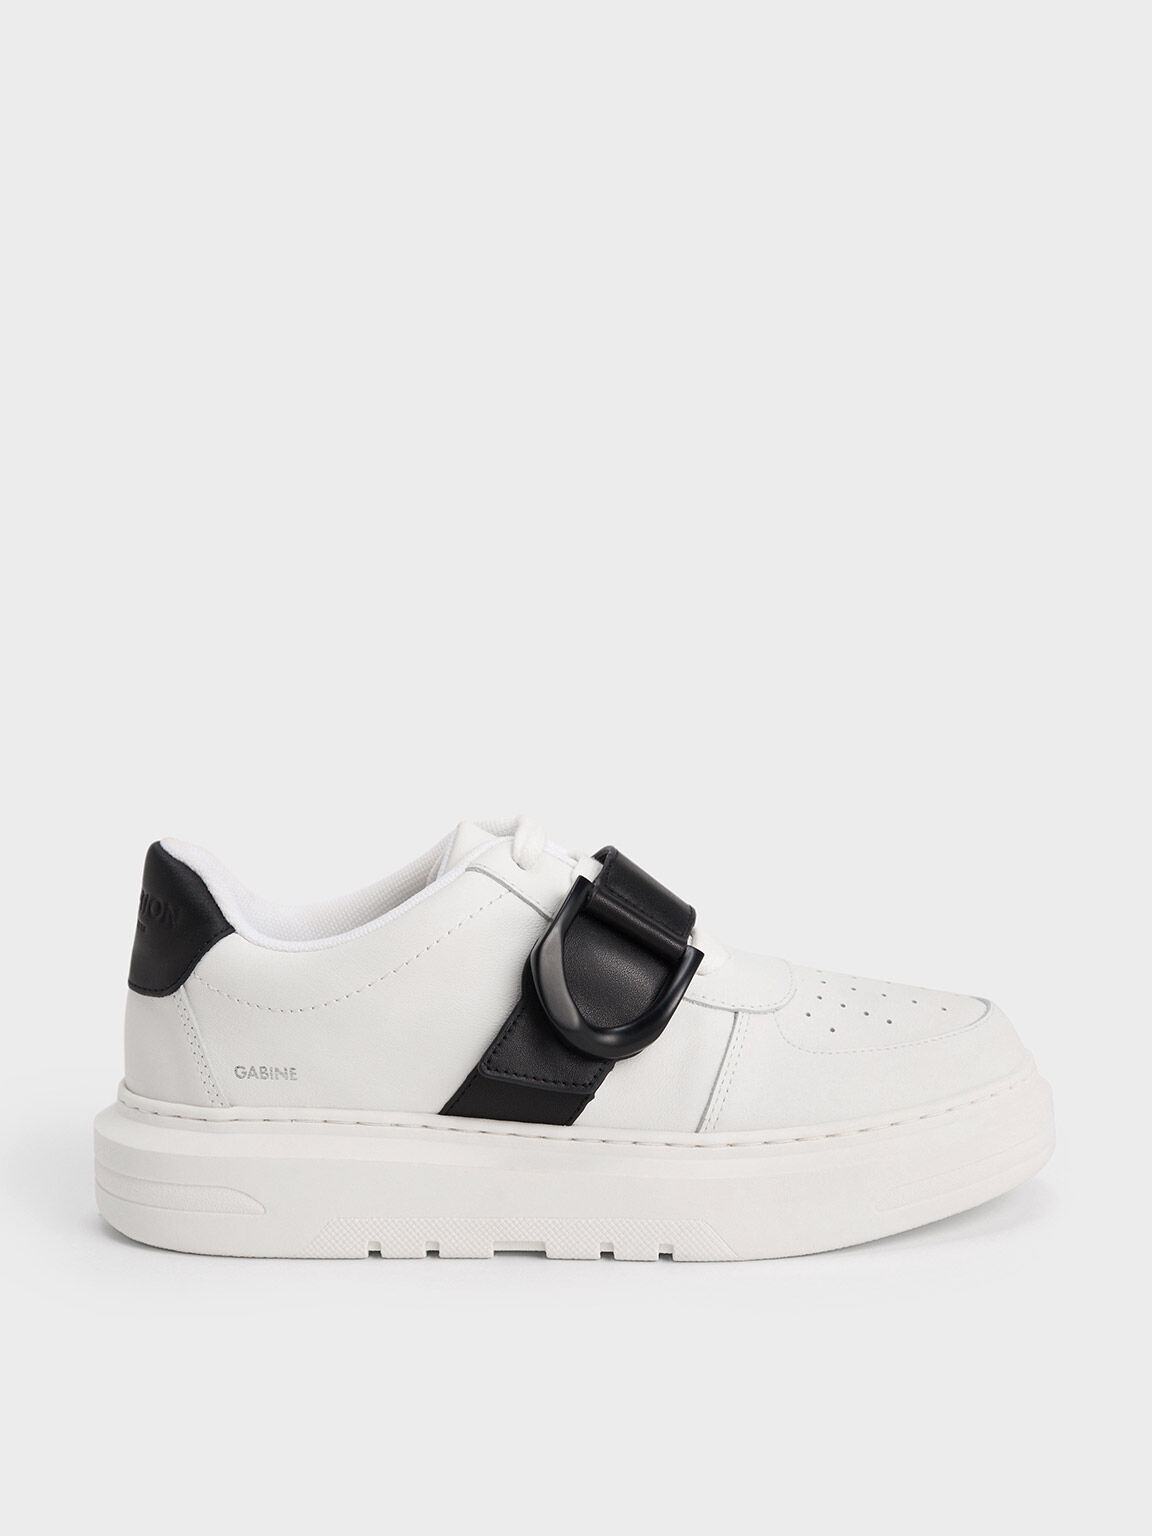 Sepatu Sneakers Leather Low-Top Gabine, Black, hi-res